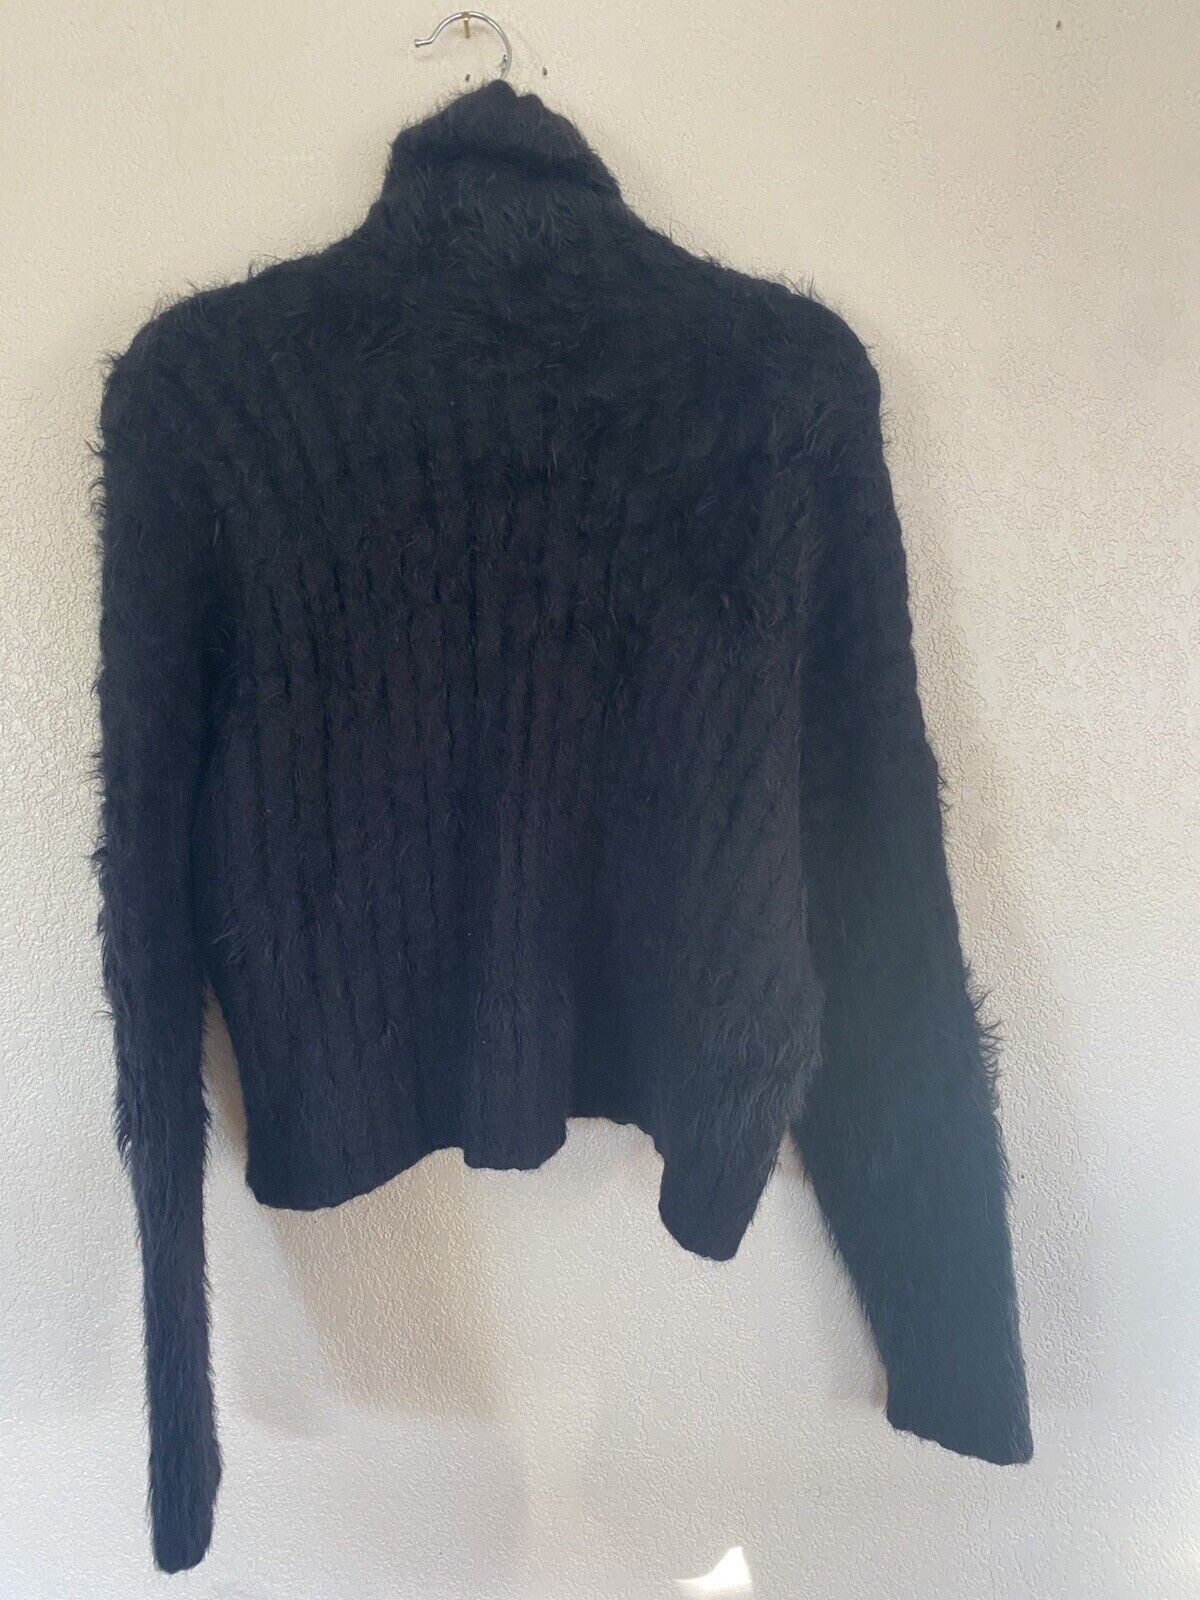 Black Fuzzy Turtleneck Sweater - Unbranded - Women's Medium # 2139